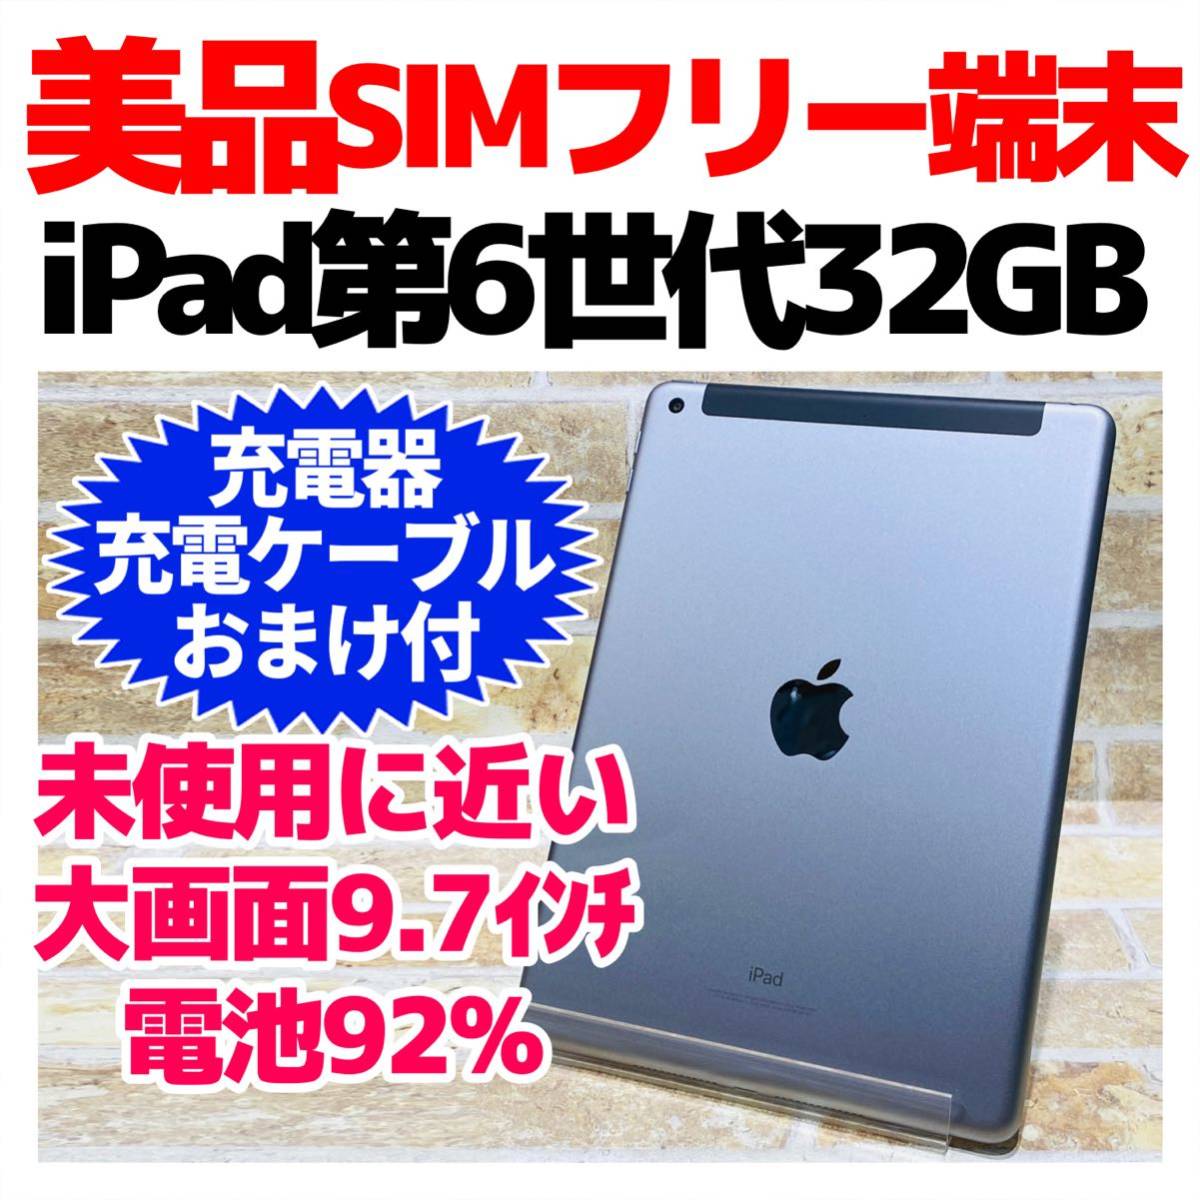 取扱店舗限定アイテム 電池最良好 美品 iPad Pro第1世代 32GB 9.7